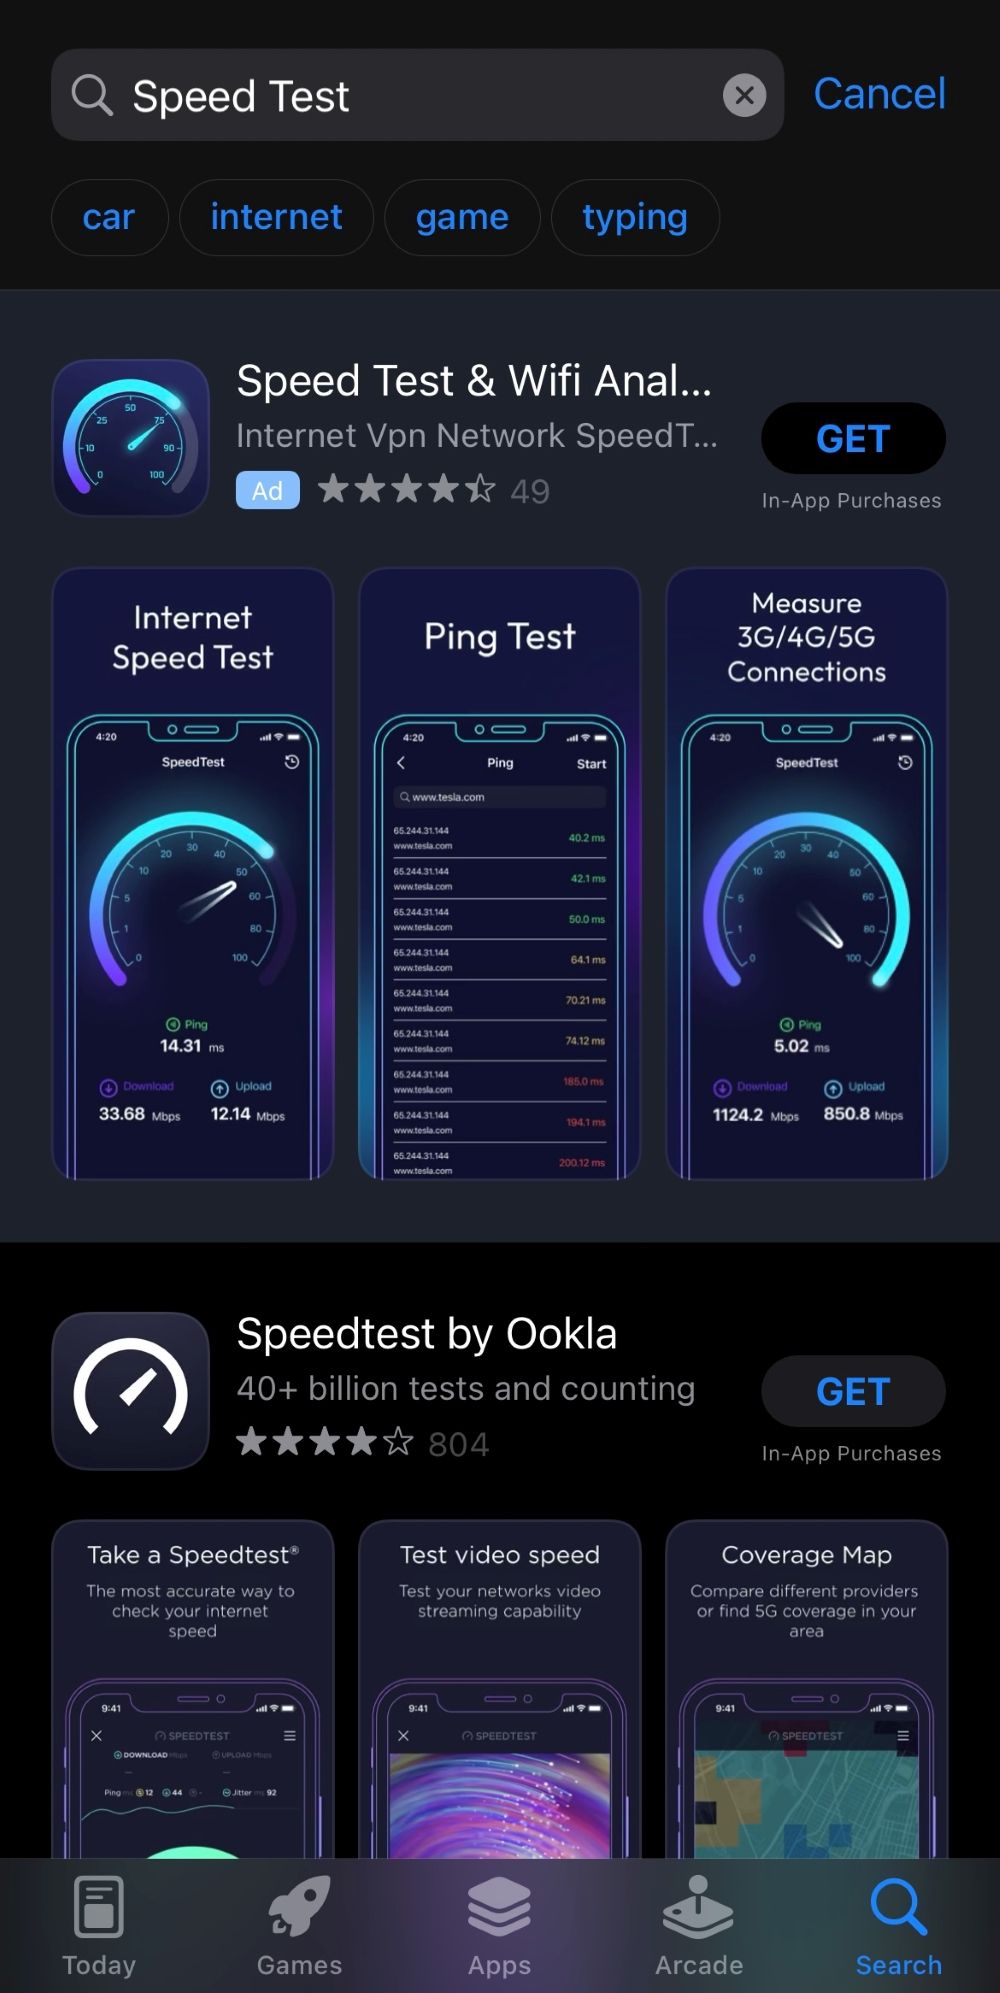 Speed Test on App Store